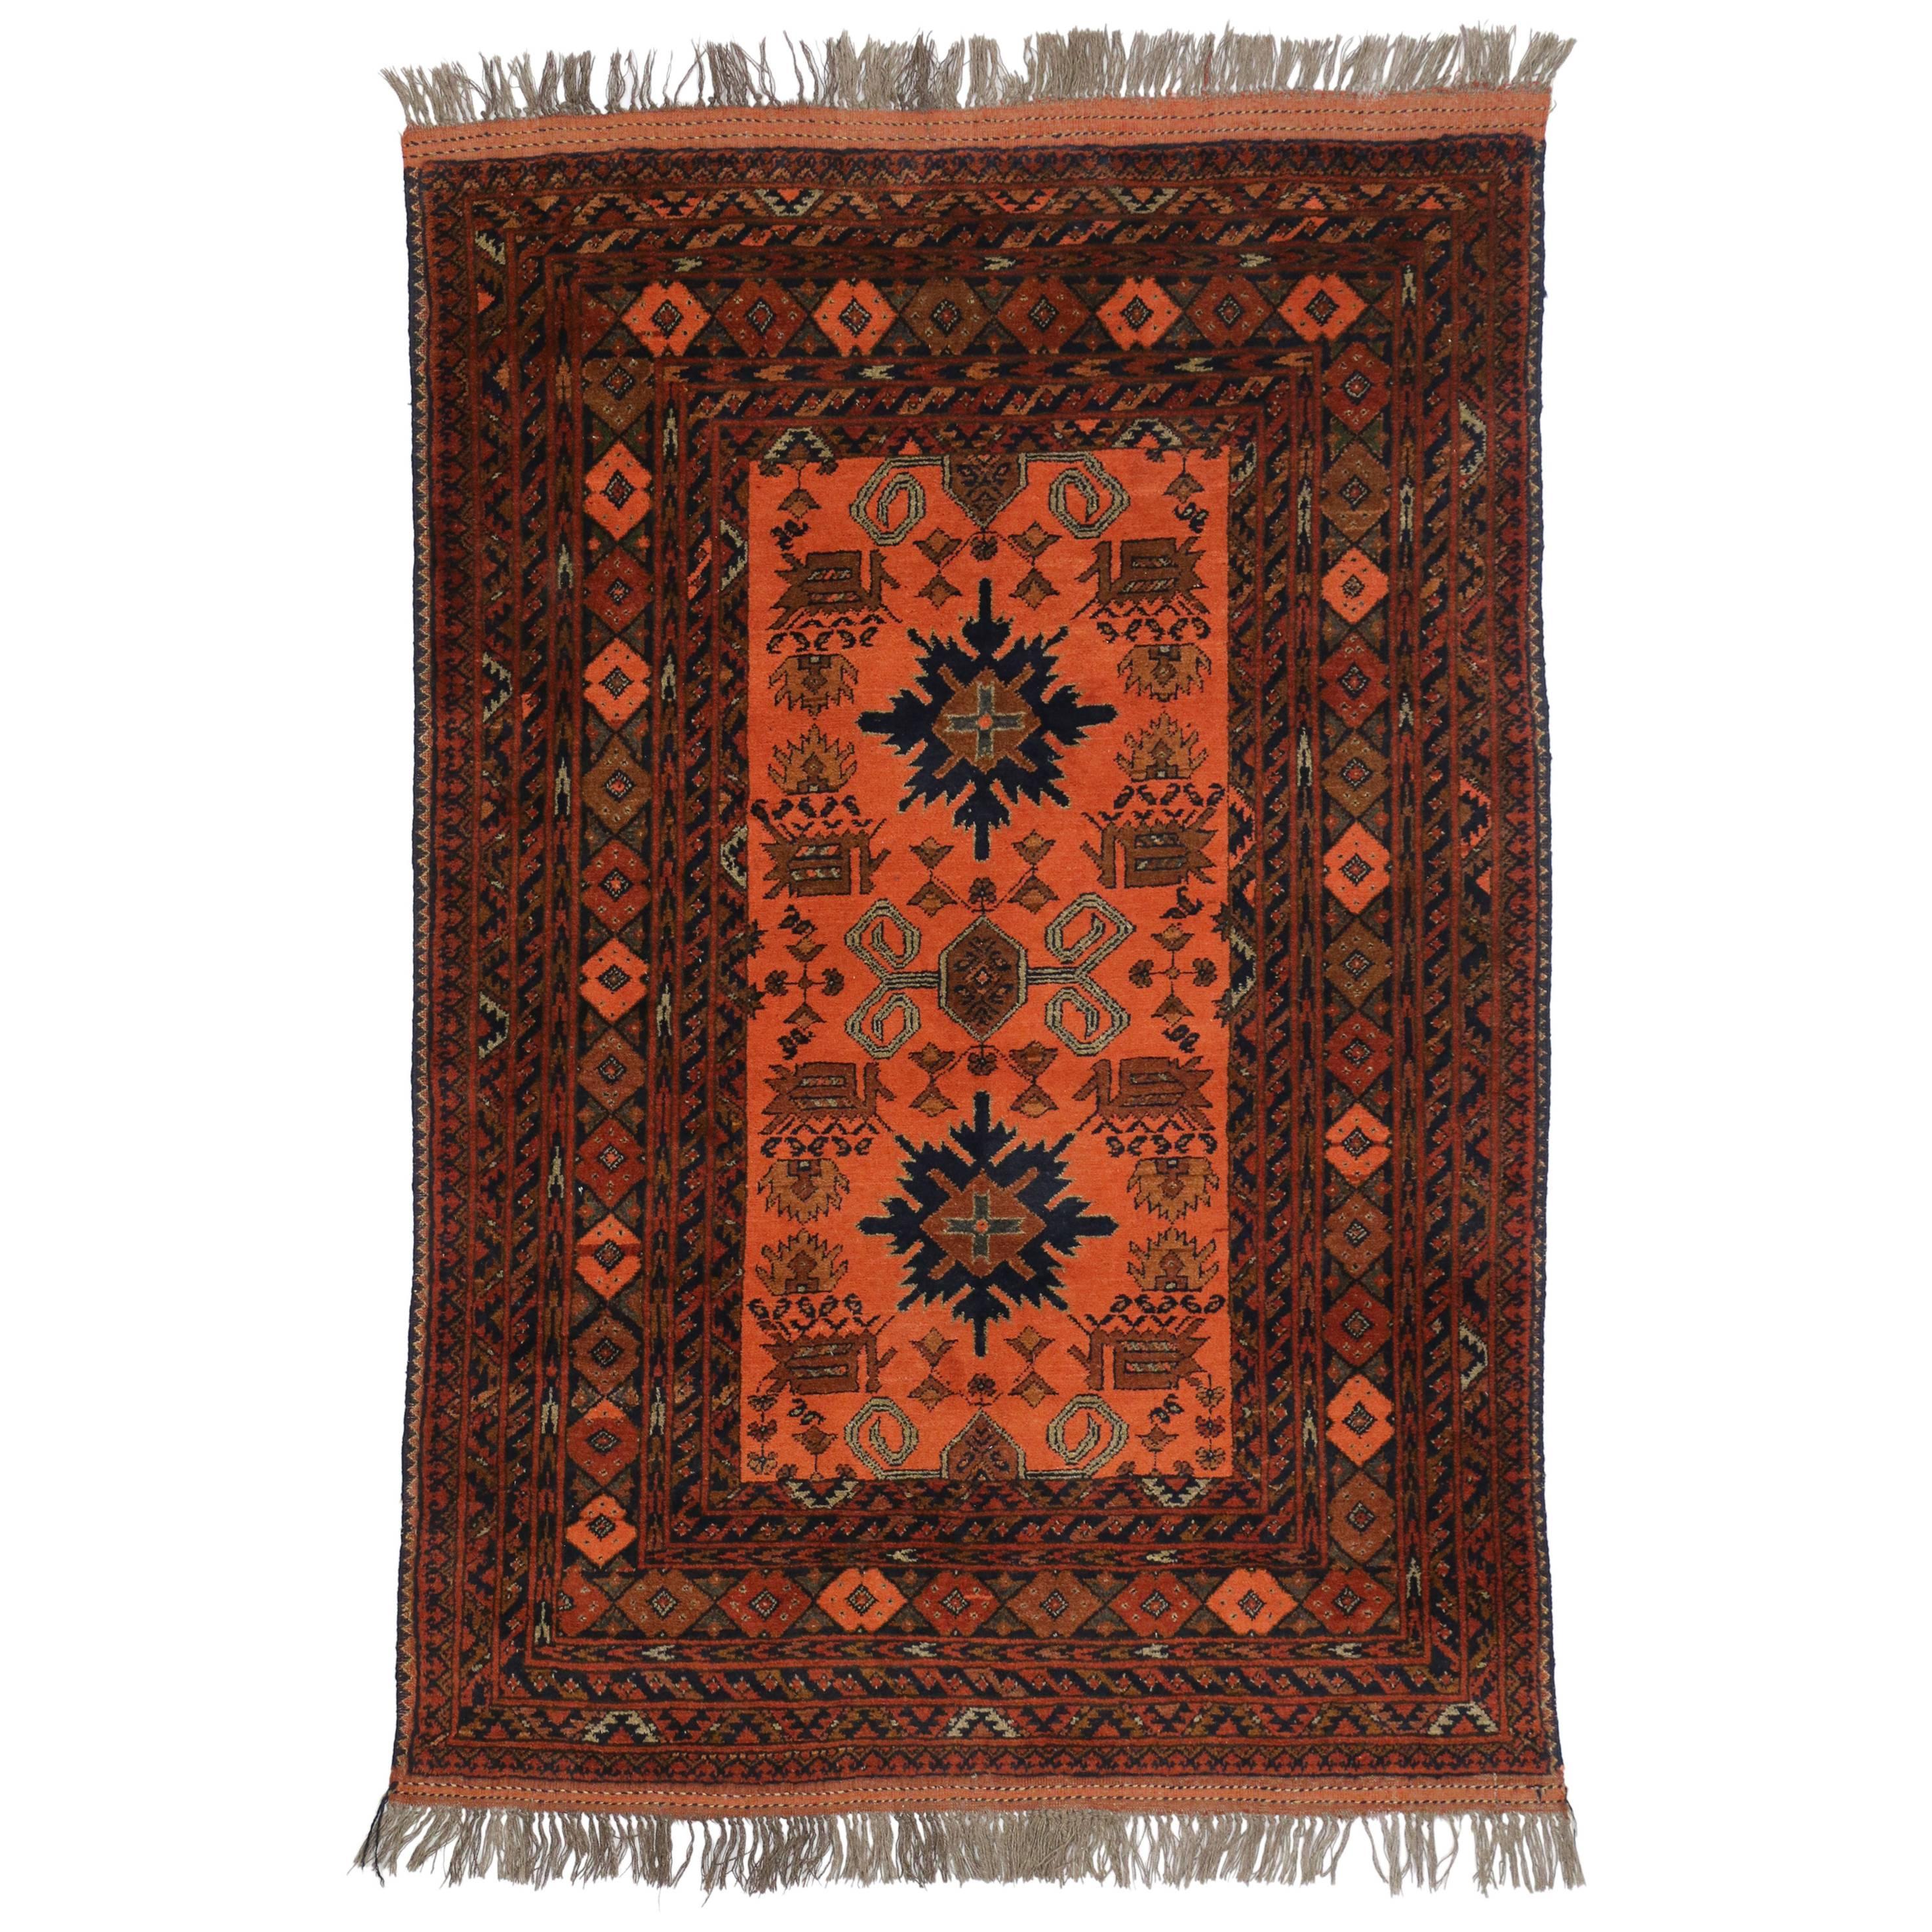 Vintage Afghani Rug with Tribal Design and Modern Style